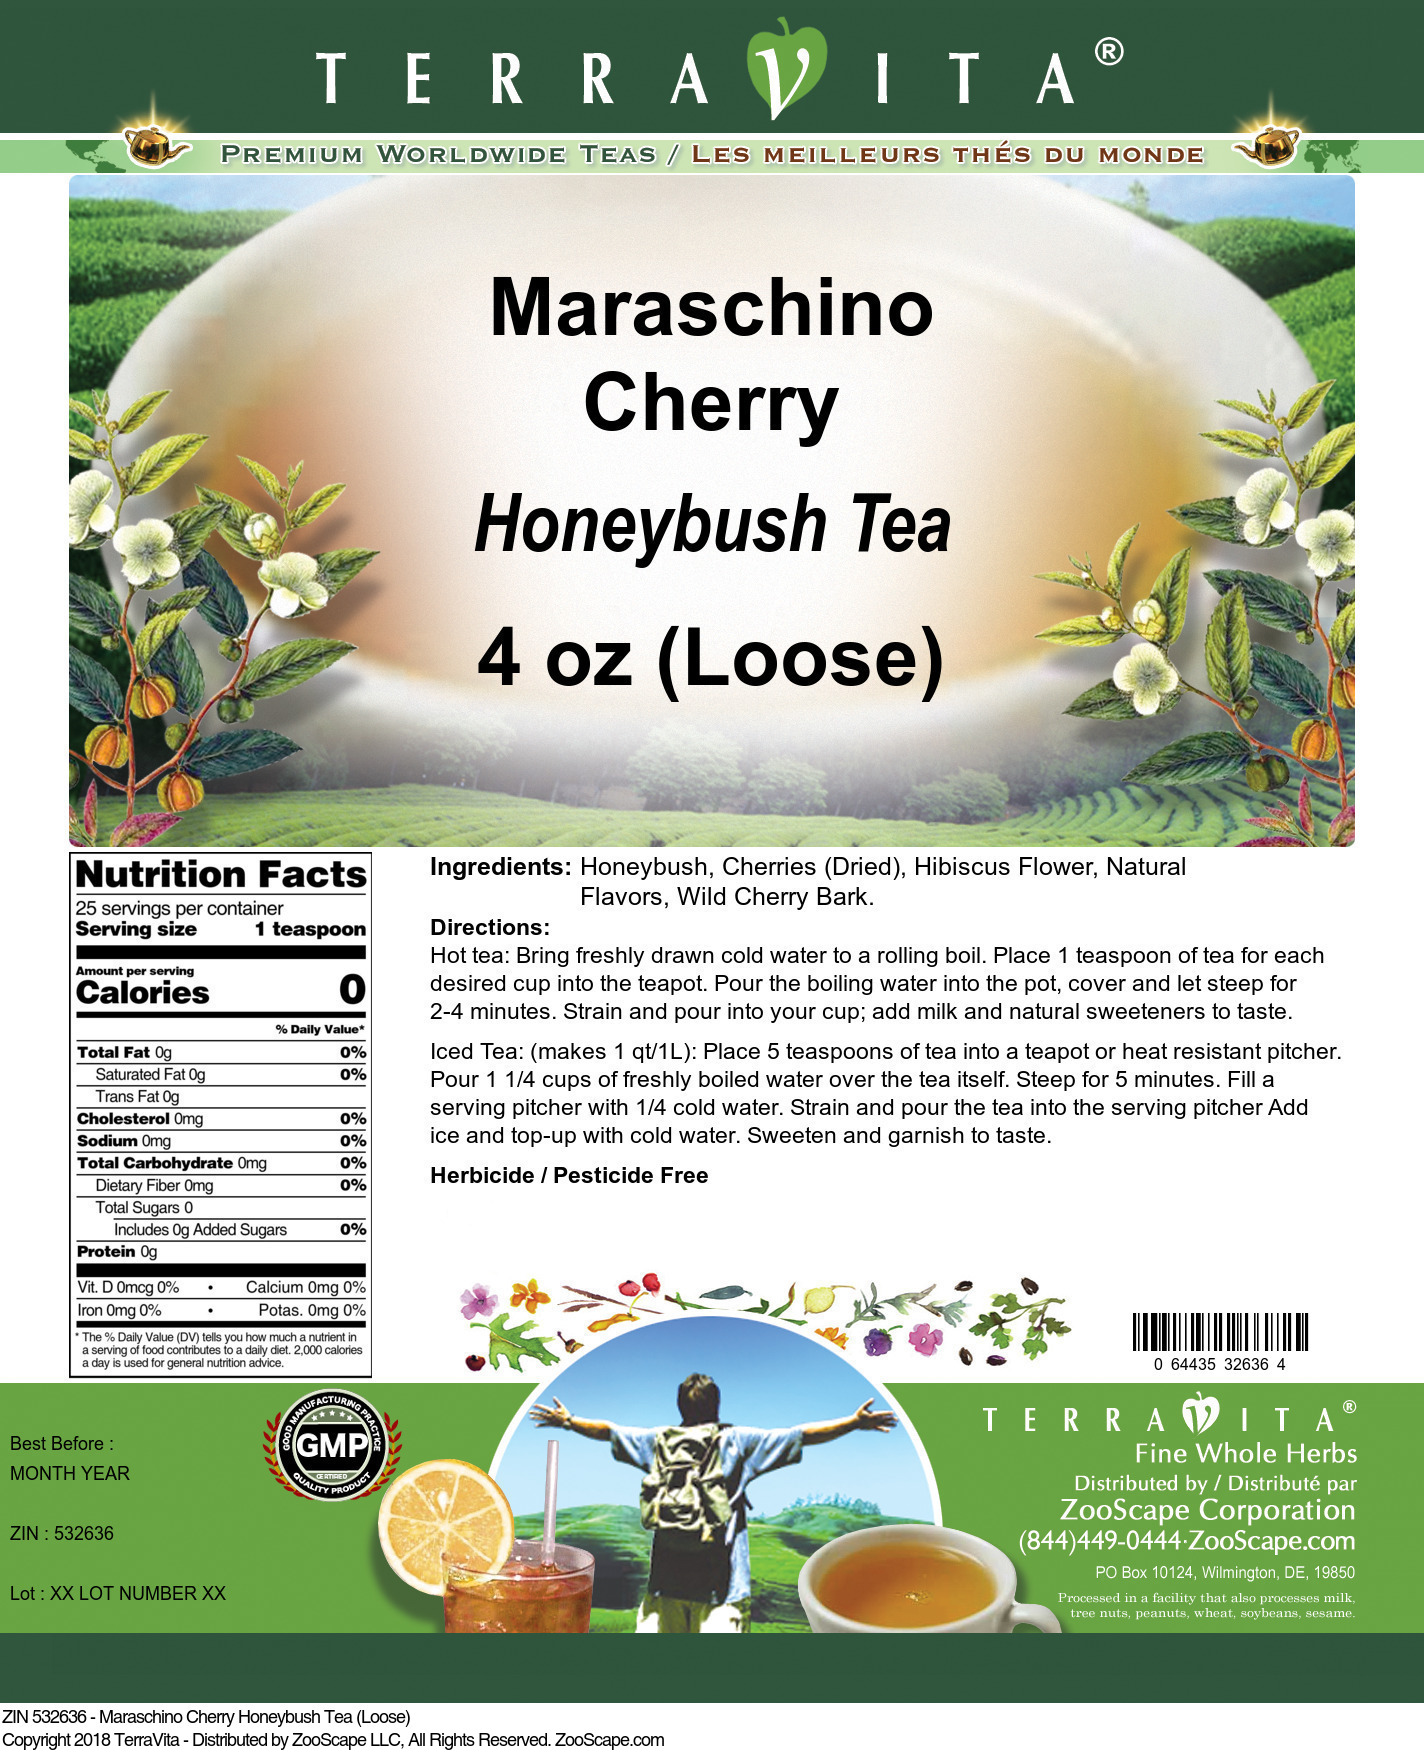 Maraschino Cherry Honeybush Tea (Loose) - Label